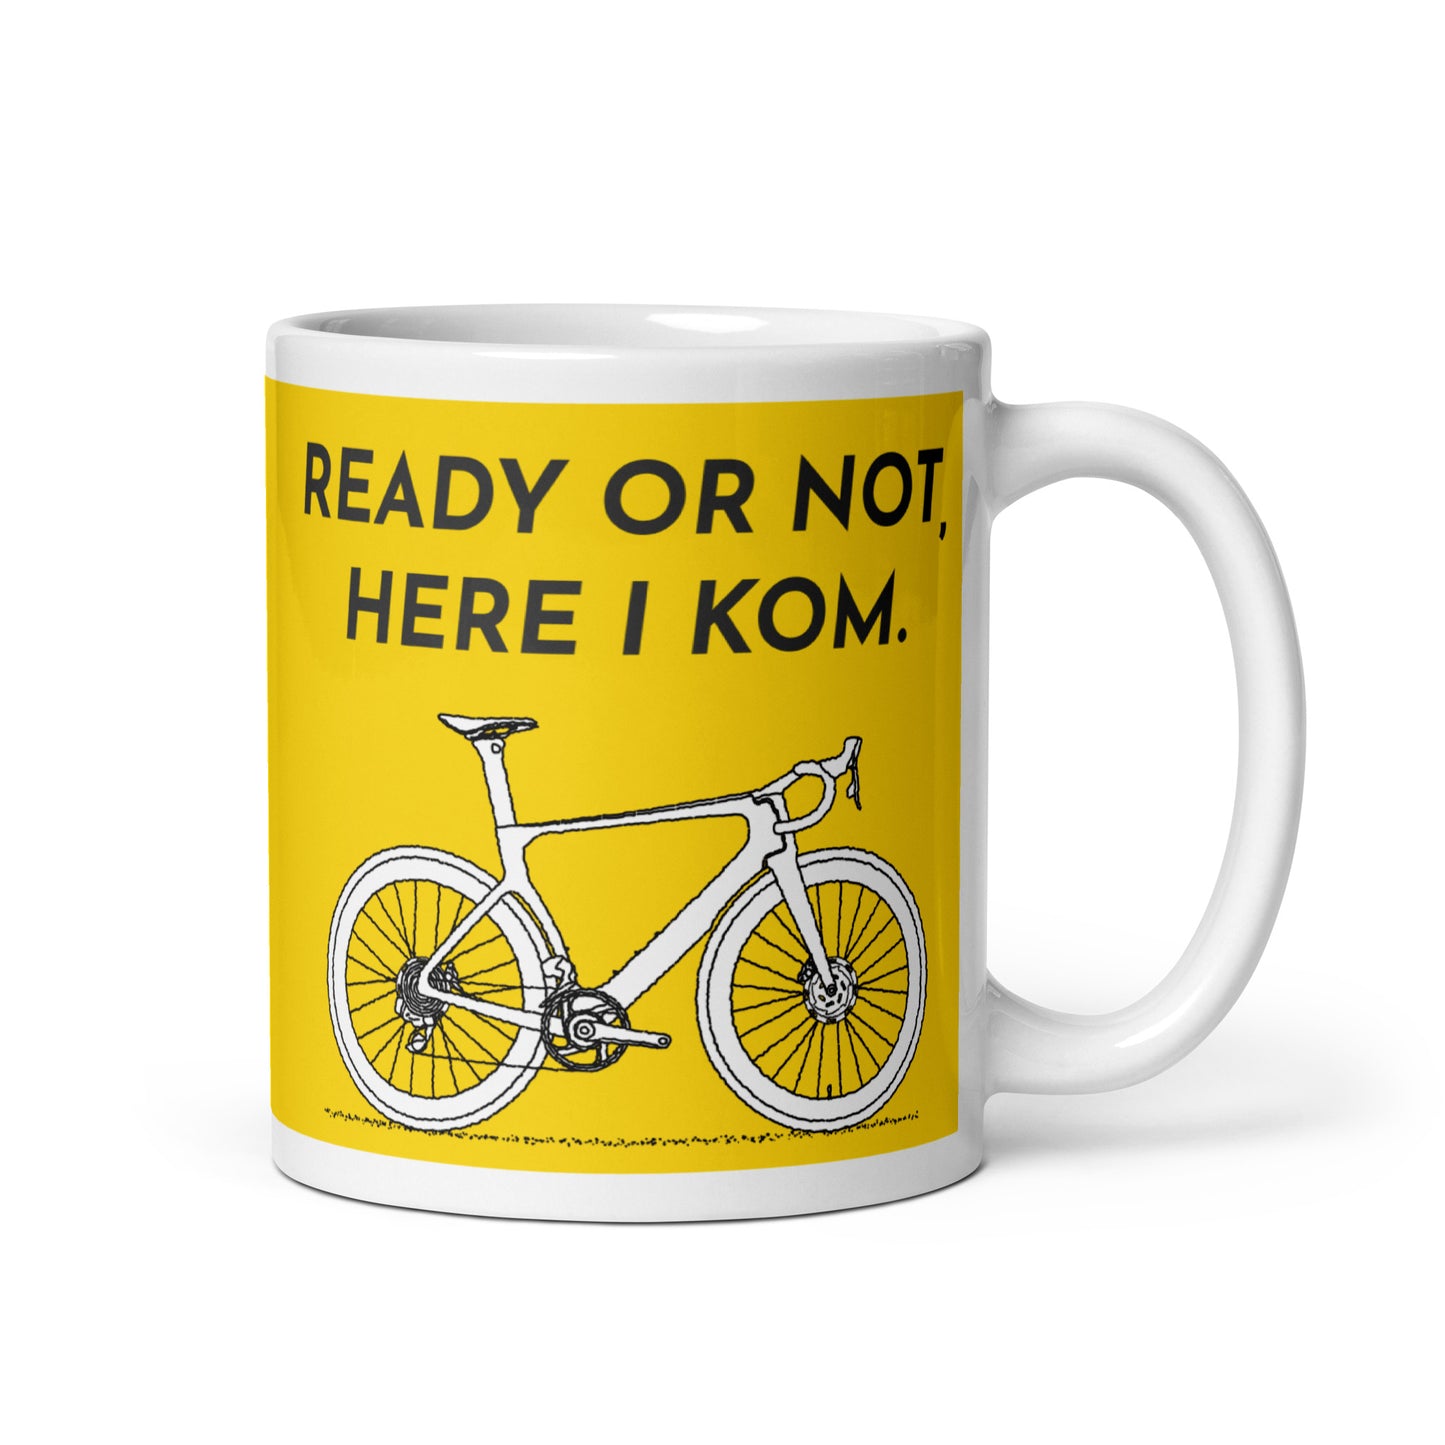 Ready Or Not, Here I KOM, Yellow Bicycle Mug M079